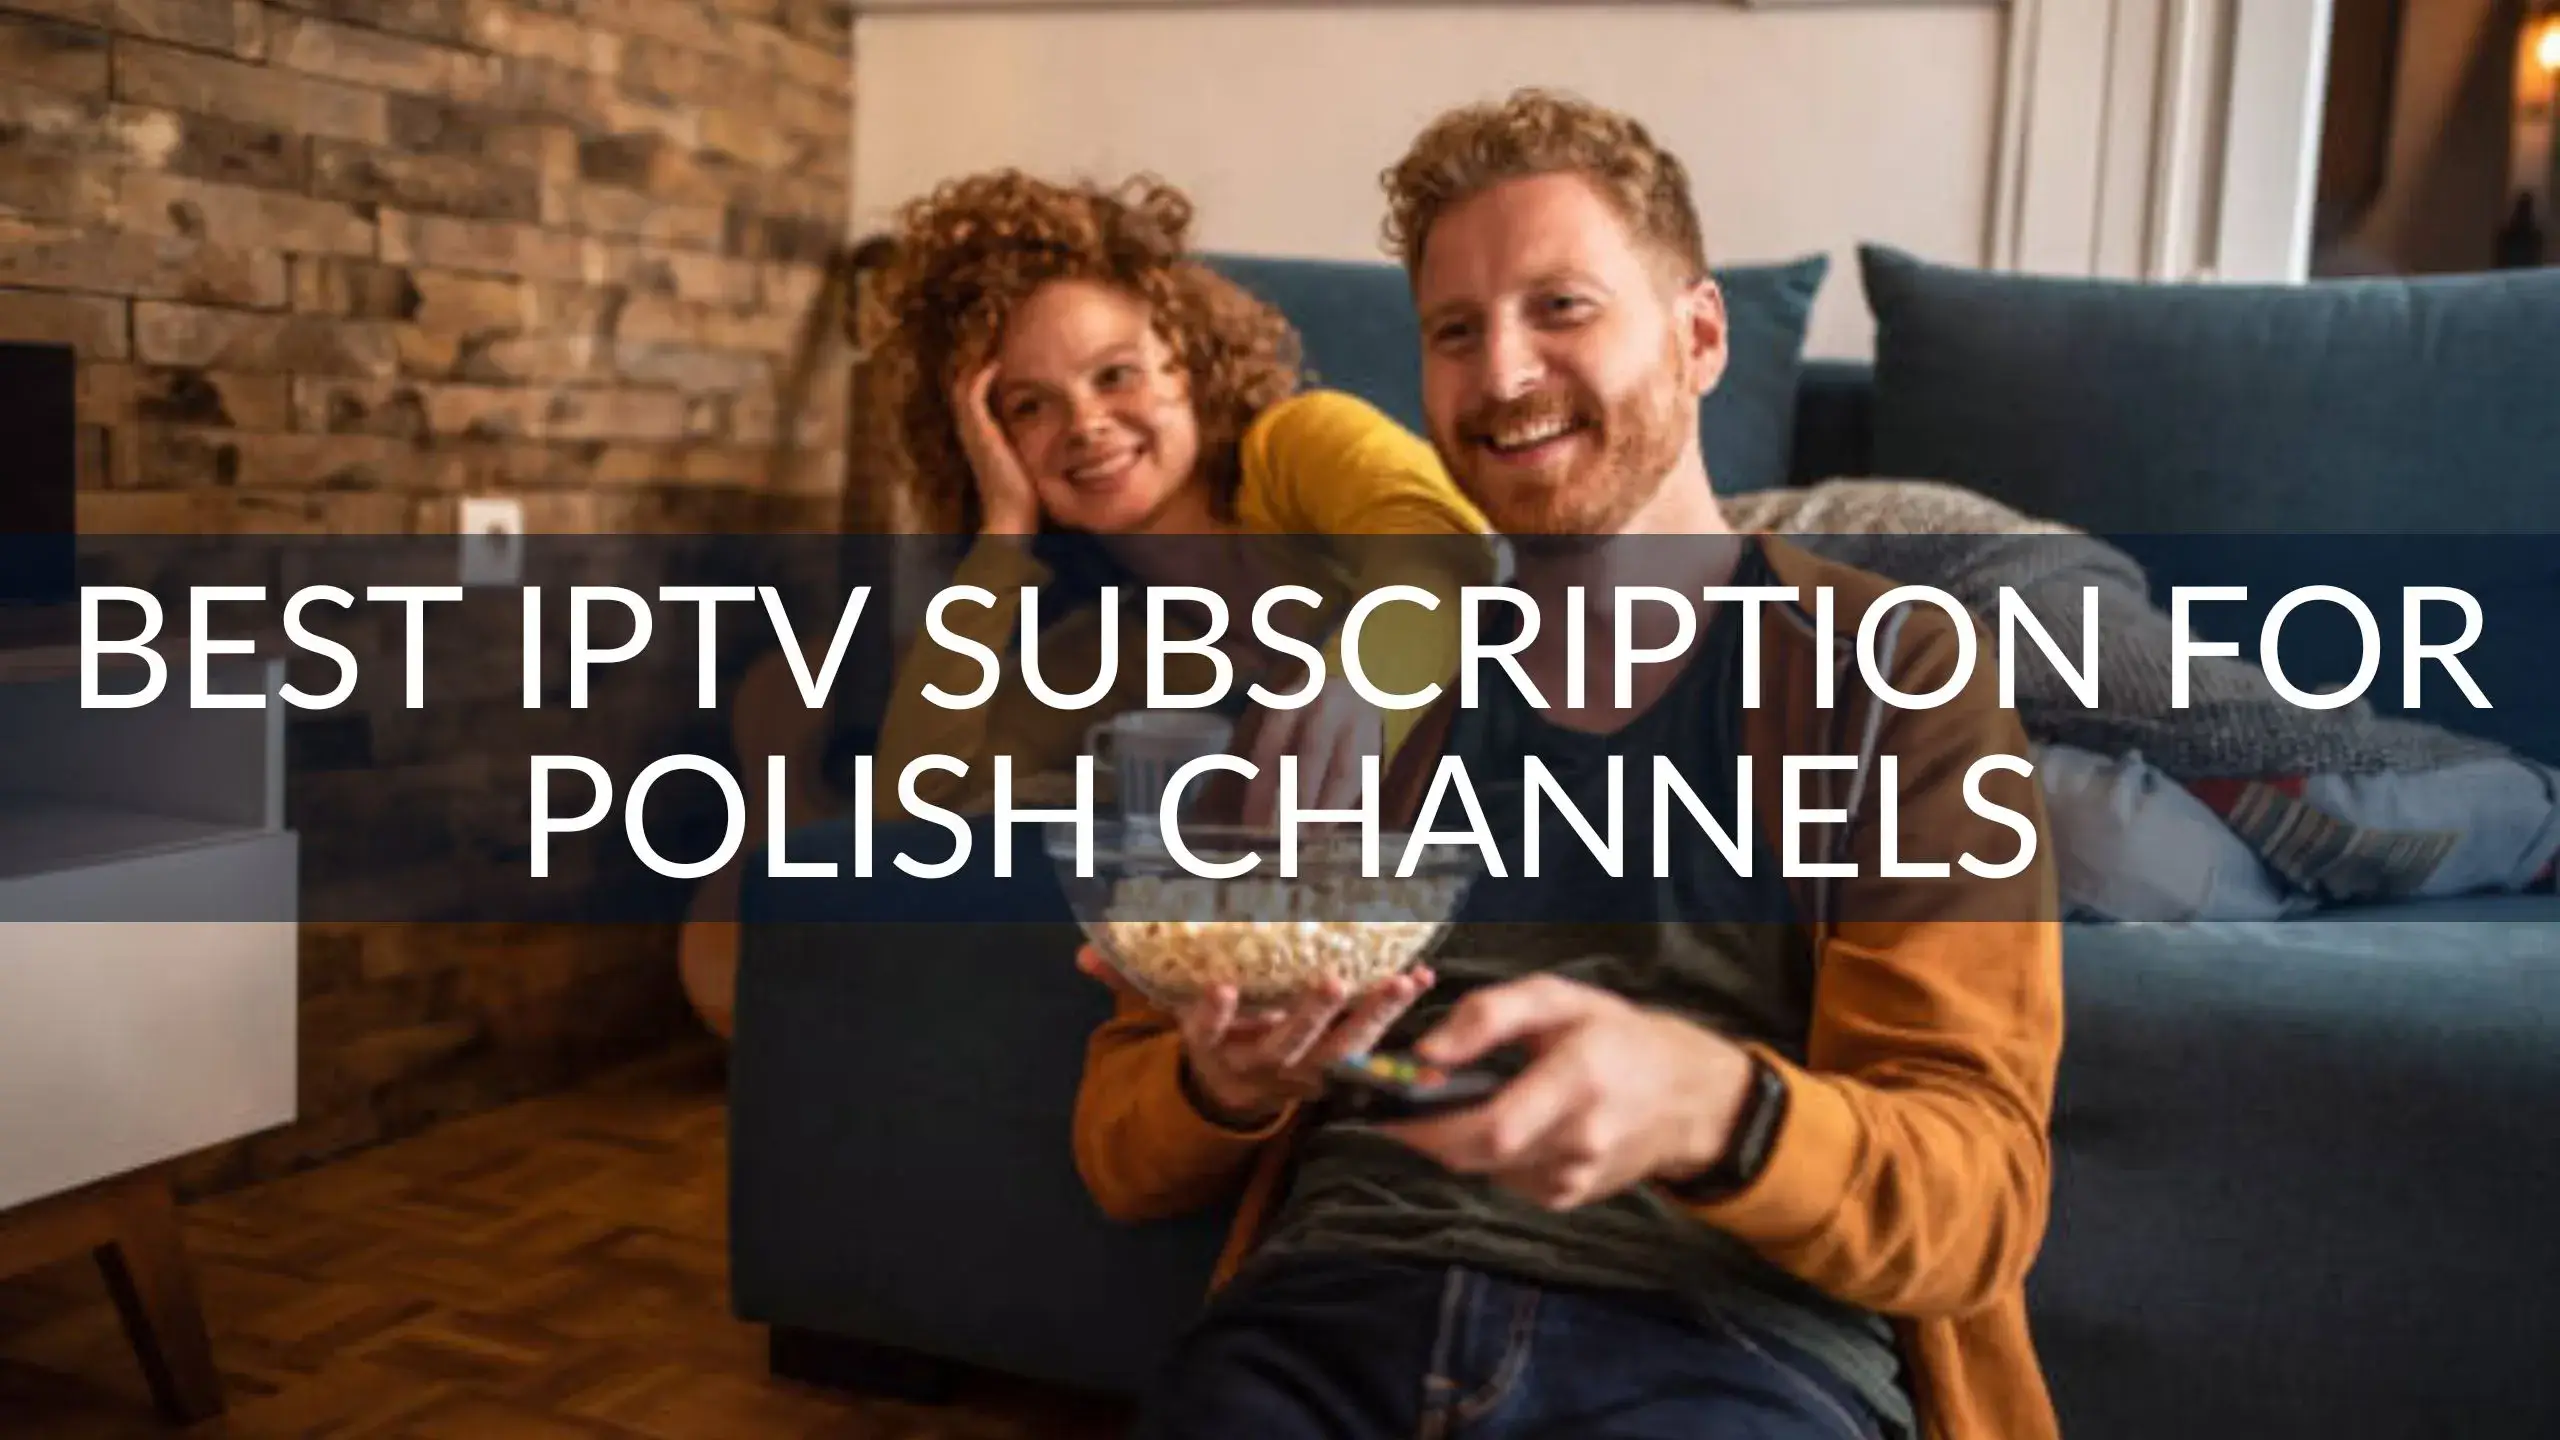 Best IPTV Subscription for Polish Channels